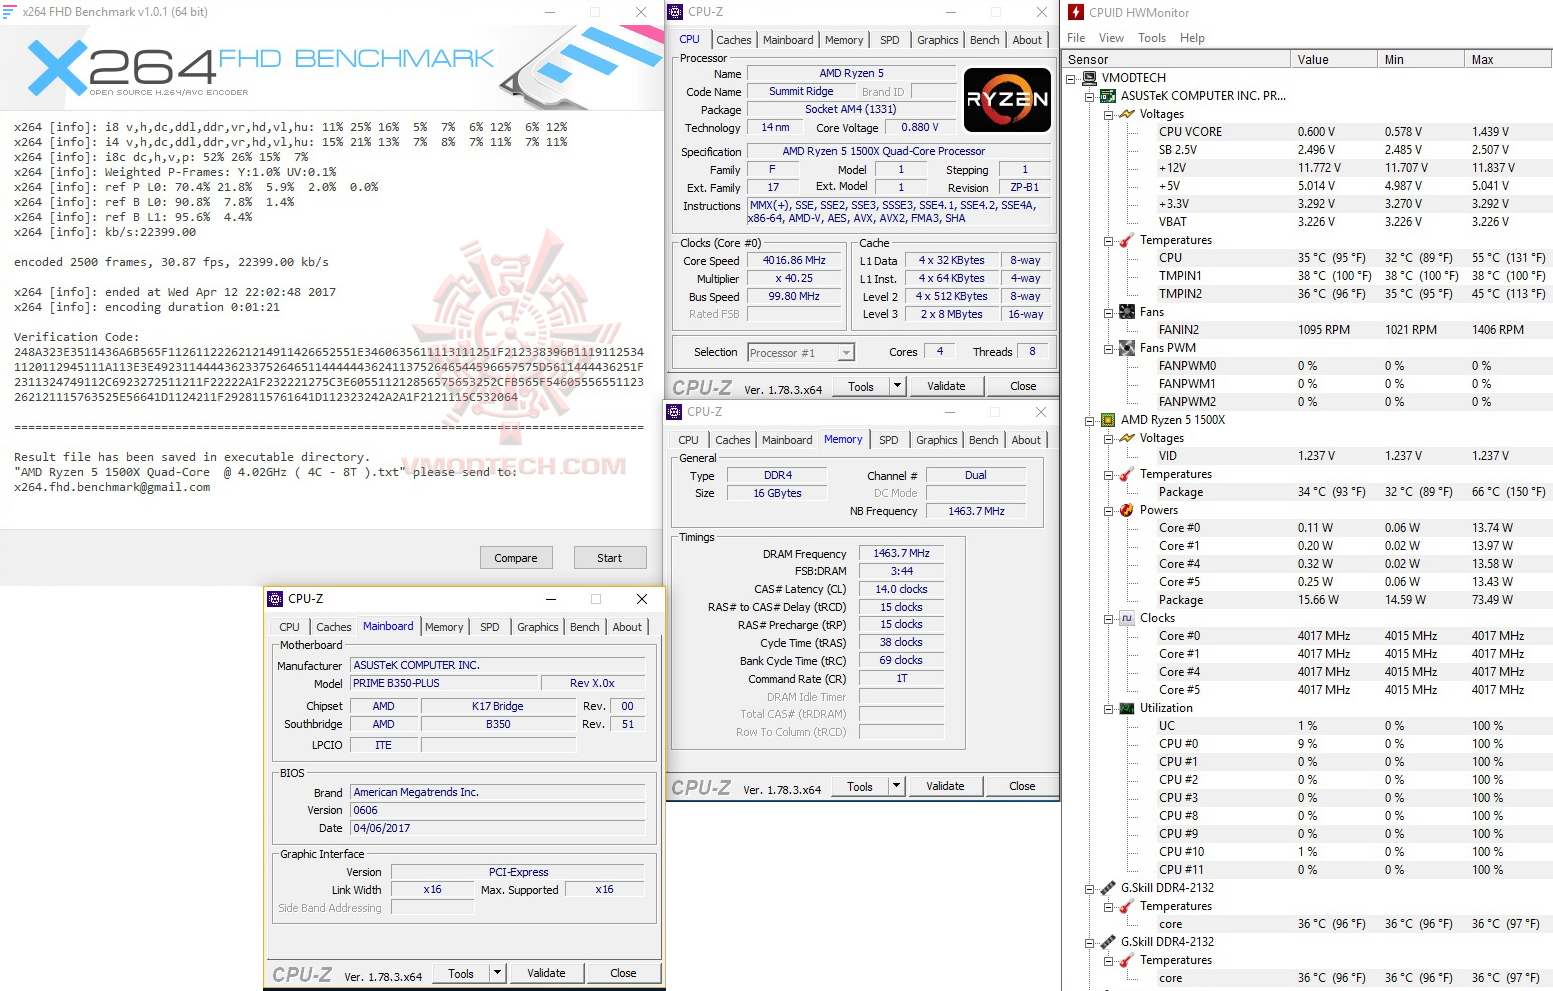 x264 11 AMD RYZEN 5 1500X Review